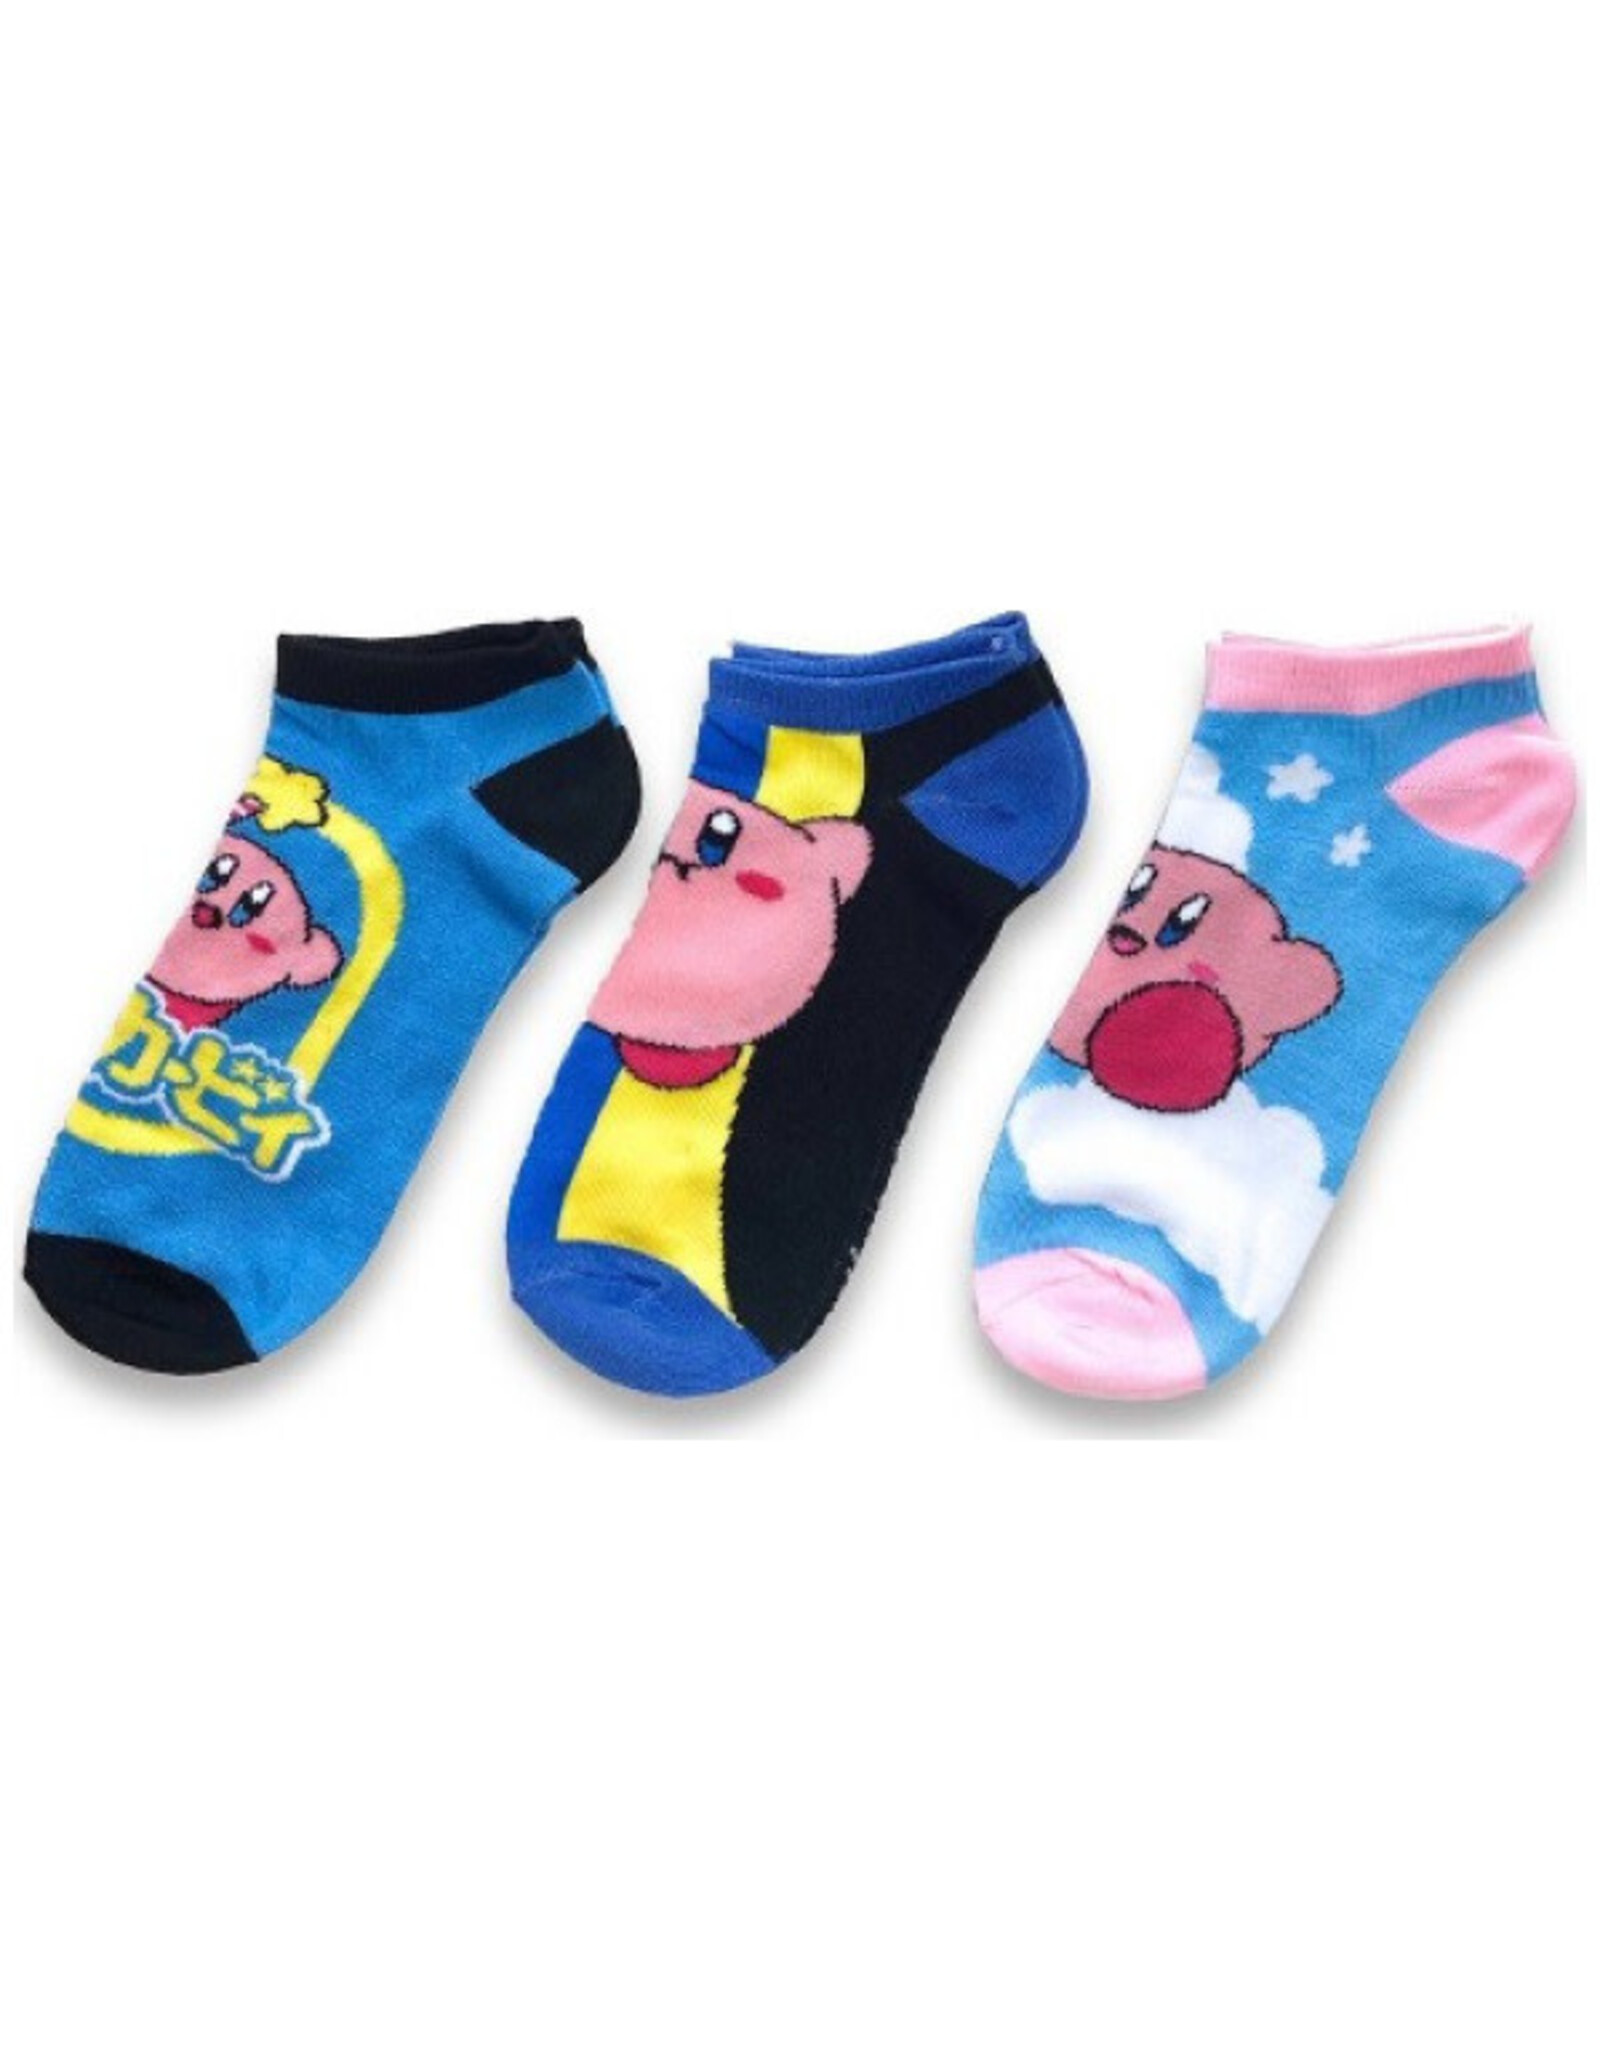 Bioworld Bioworld - Kirby - Kirby Character Ankle Socks [3 Pack]